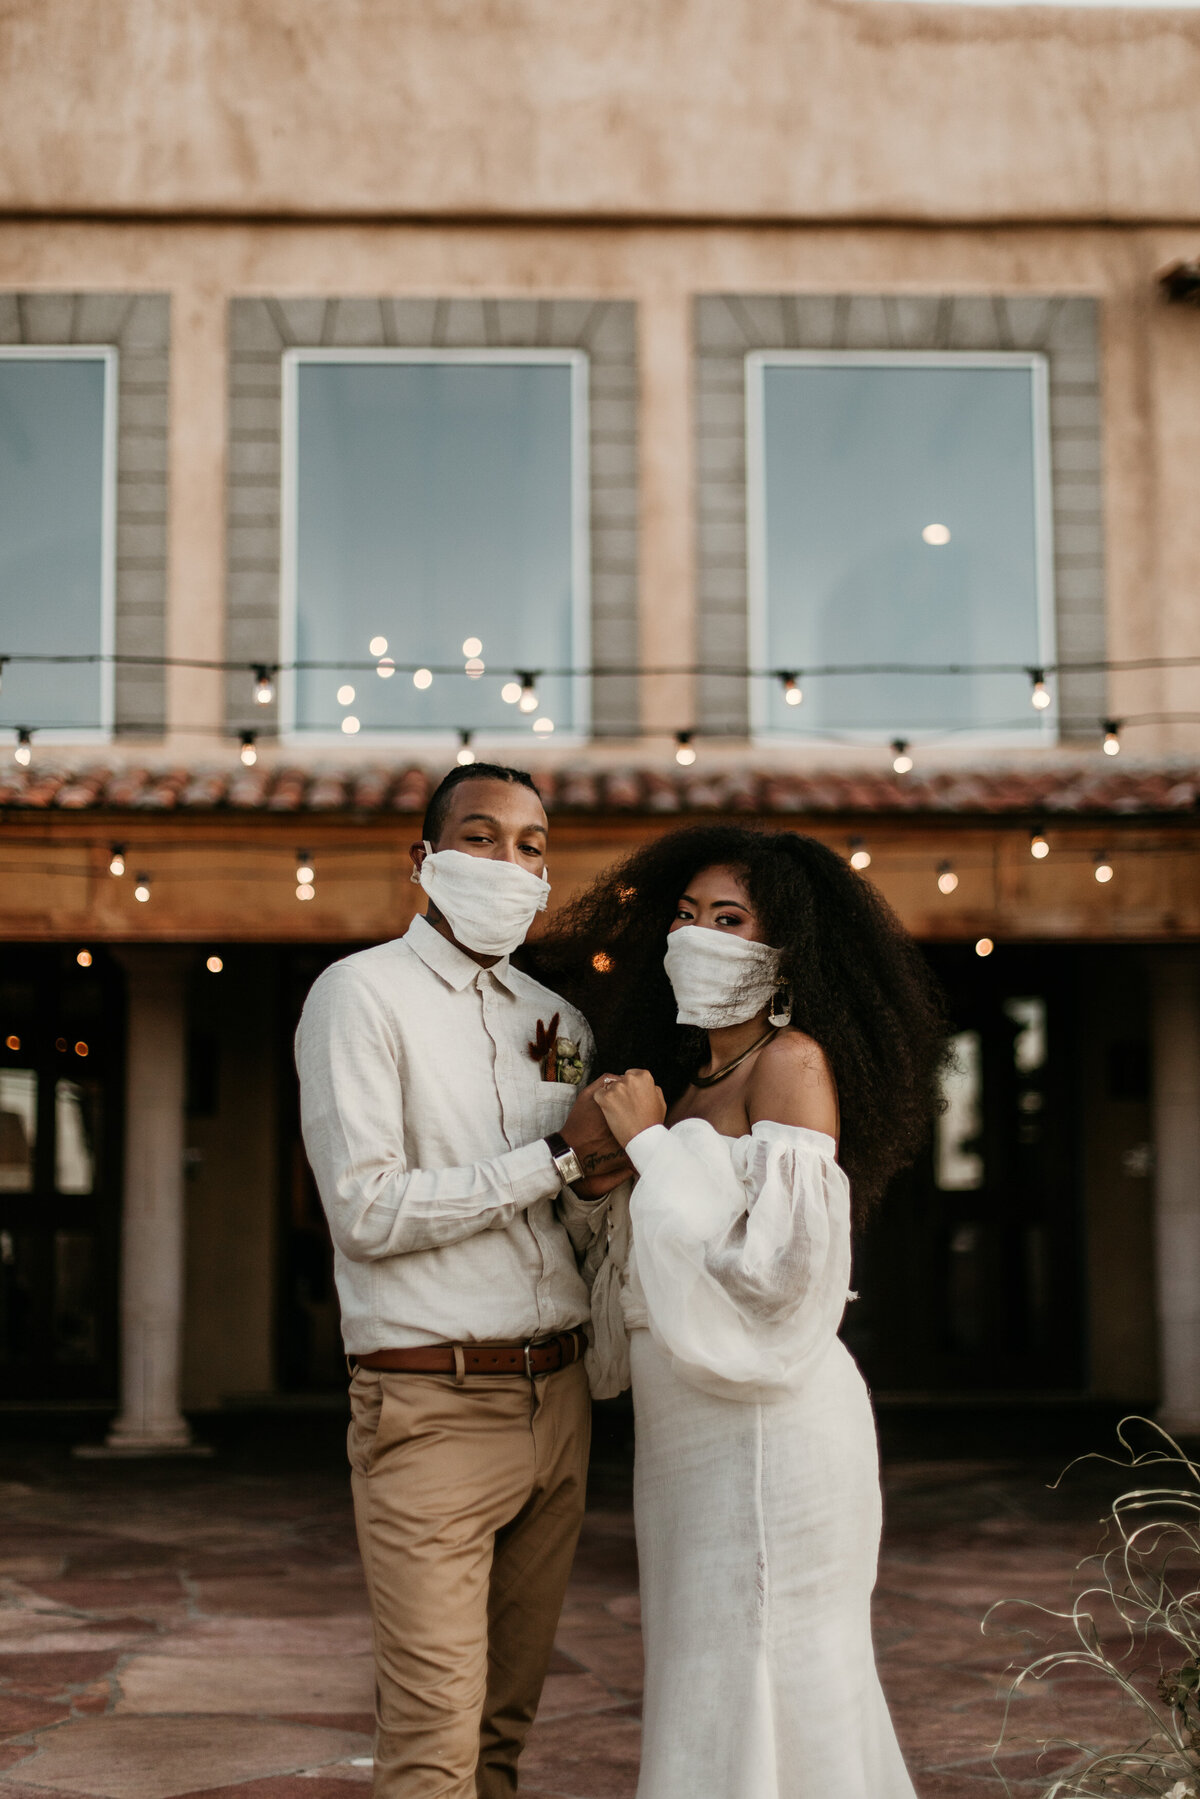 bride and groom holding hands wearing masks at Santa Fe venue courtyard wearing masks